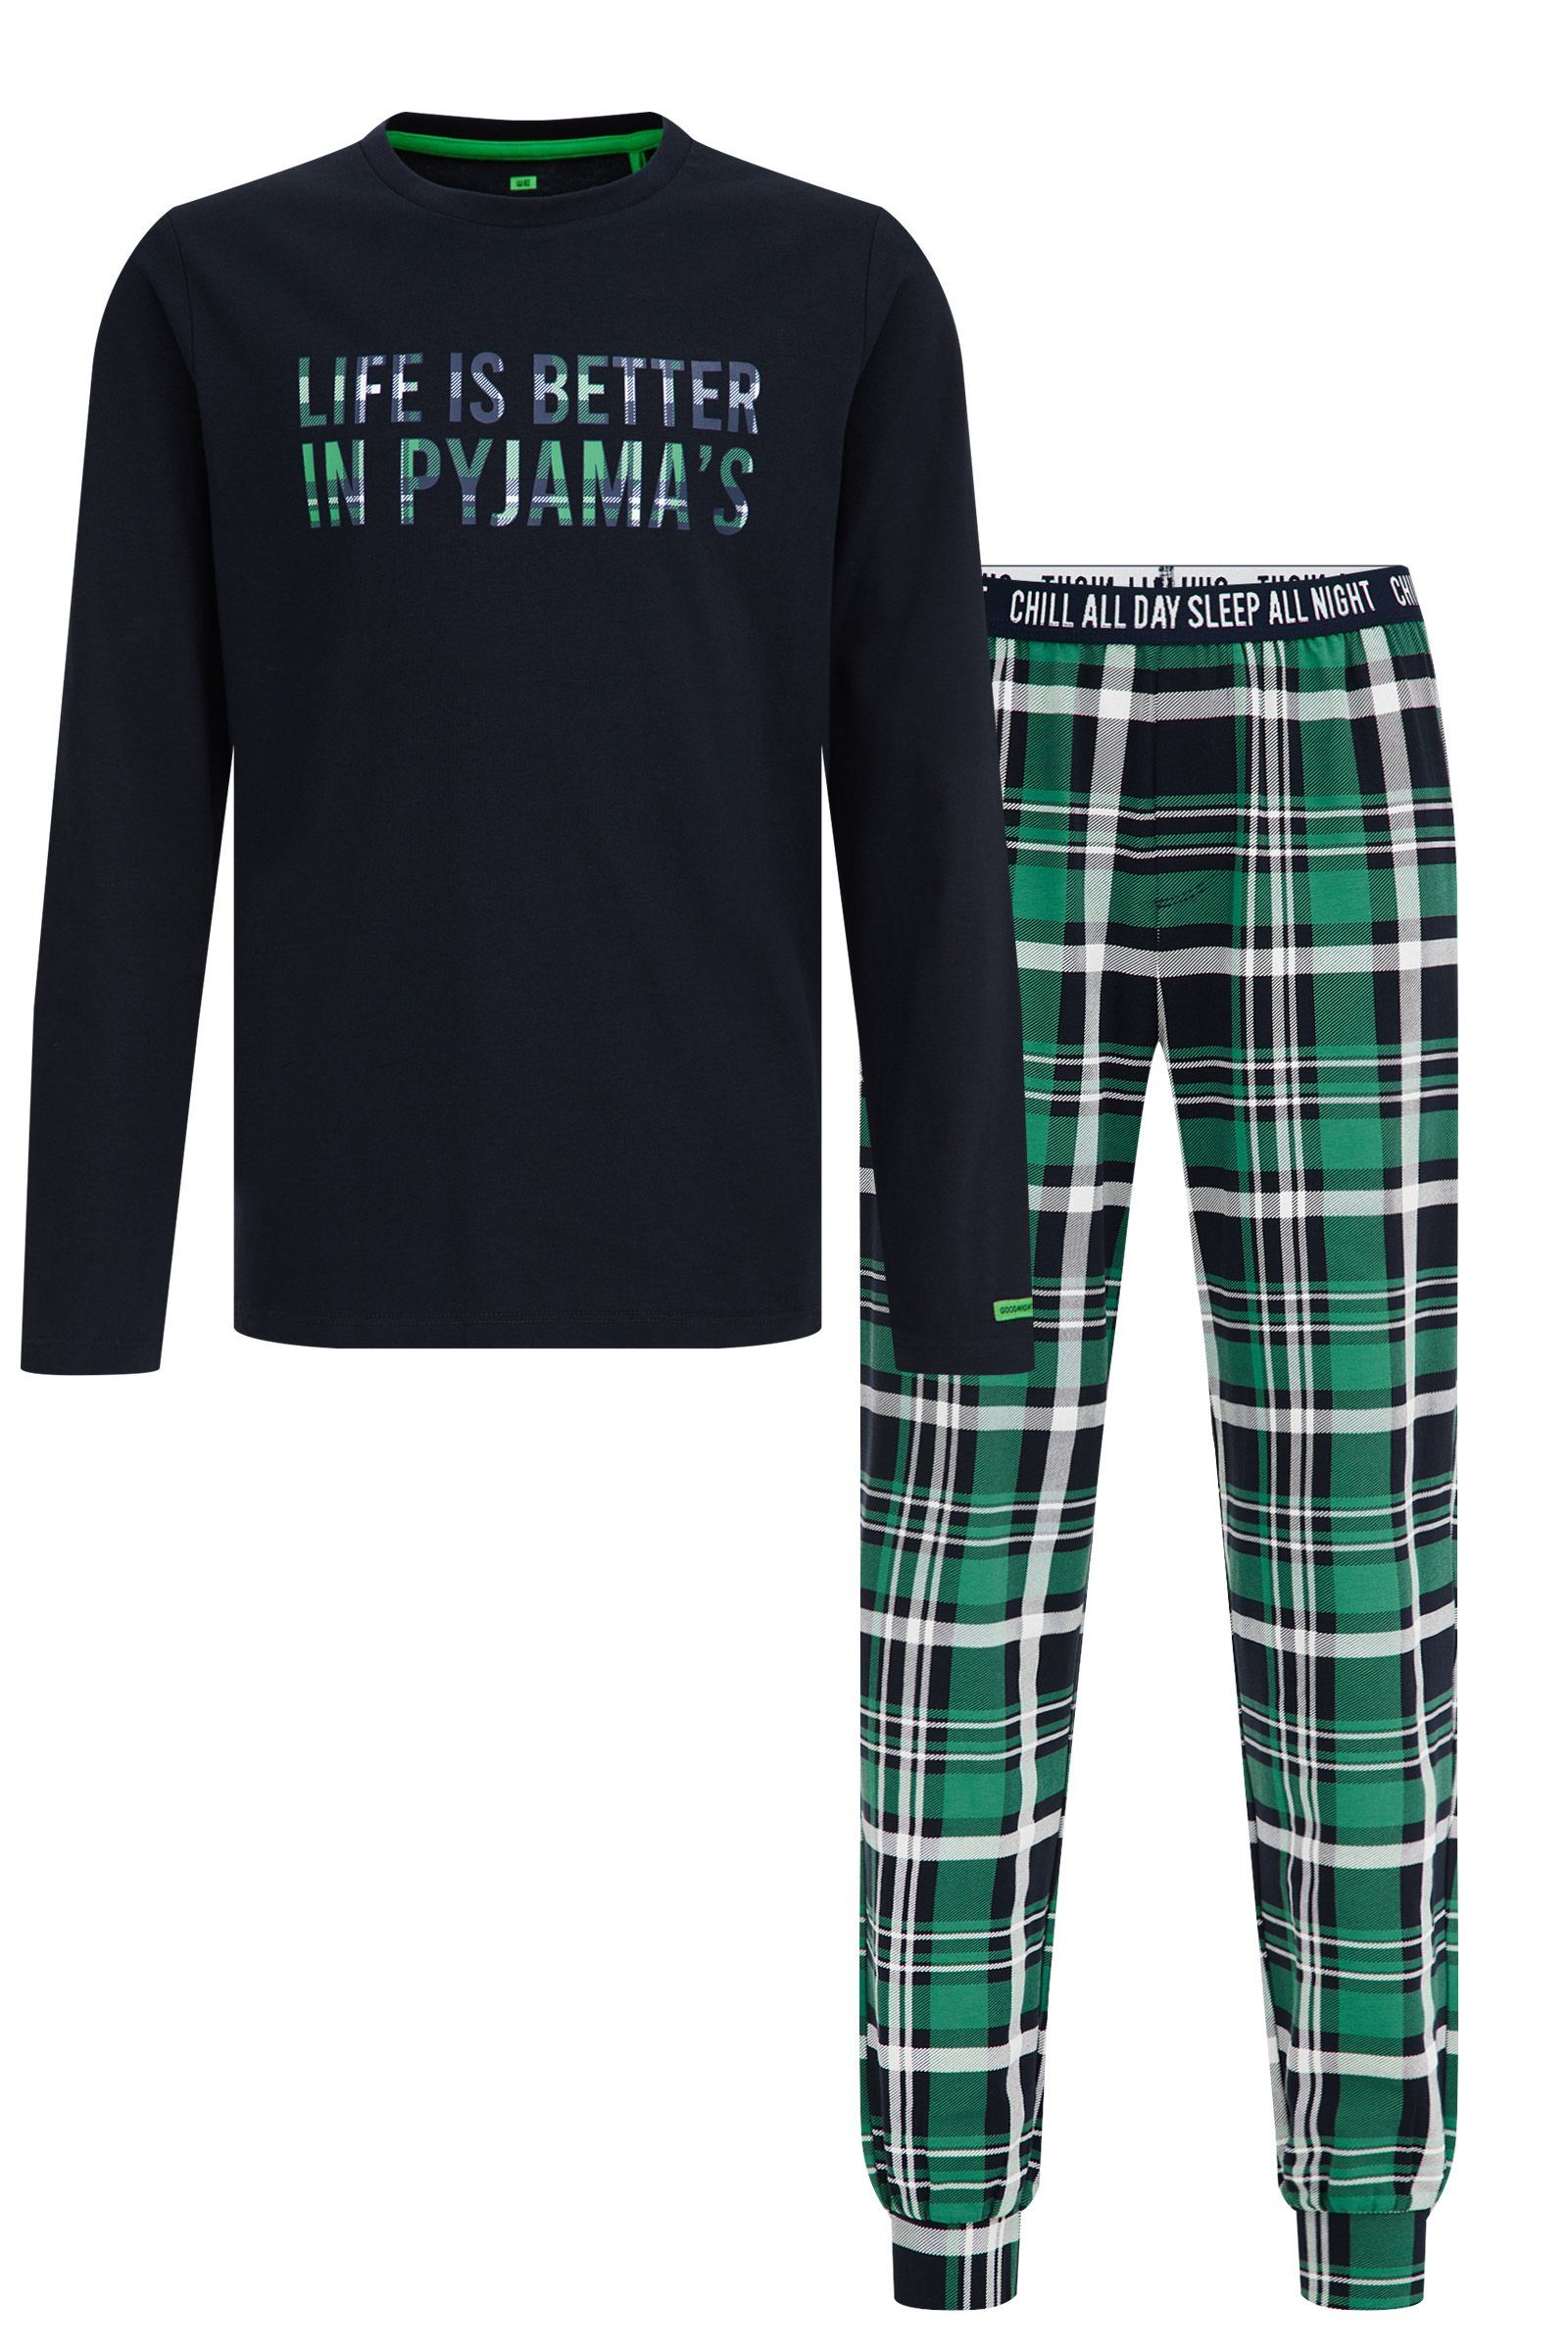 WE Fashion Pyjama